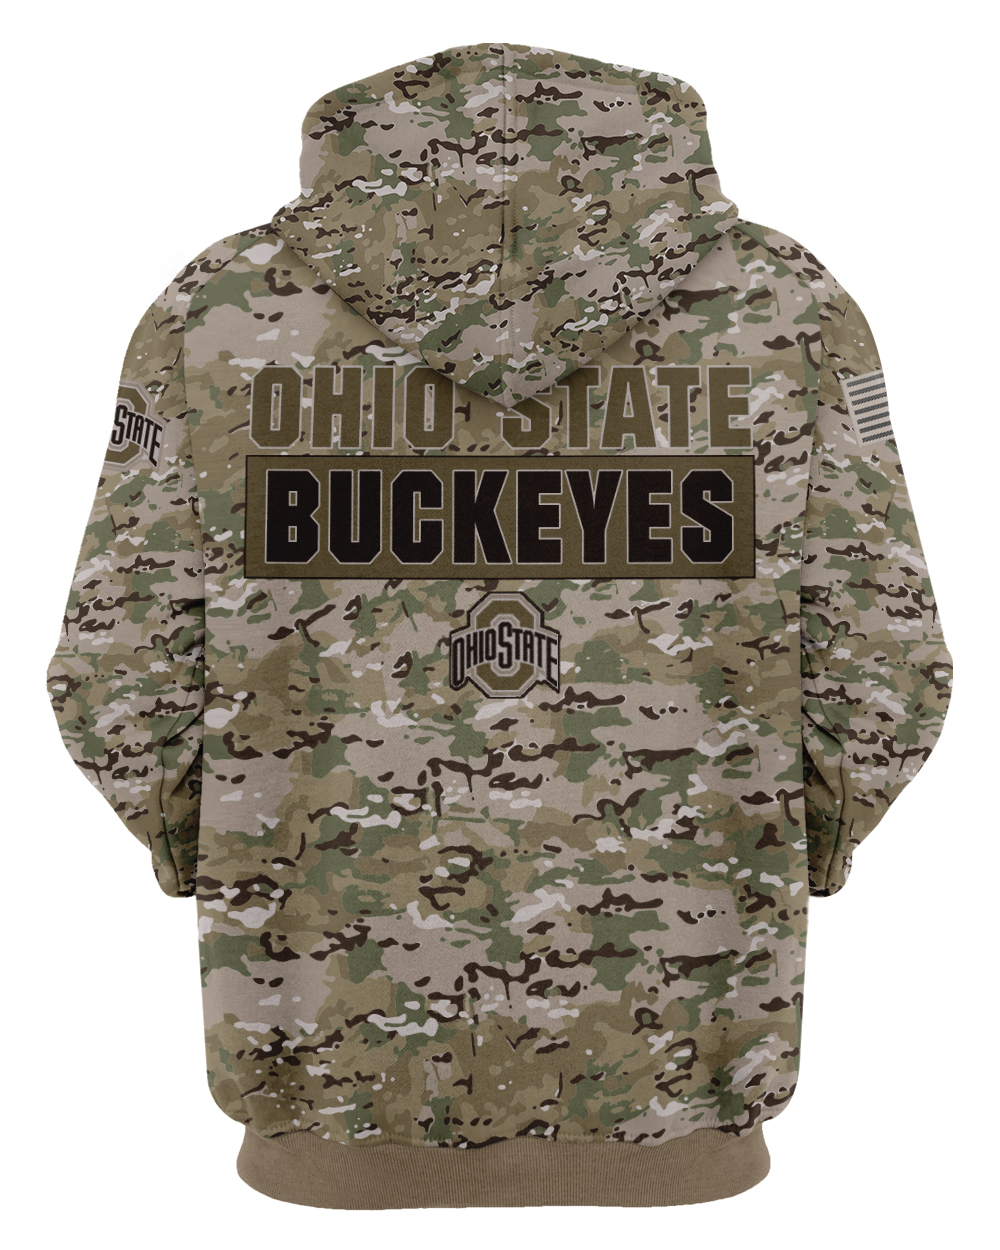 Ohio state buckeyes camo style all over print hoodie - back